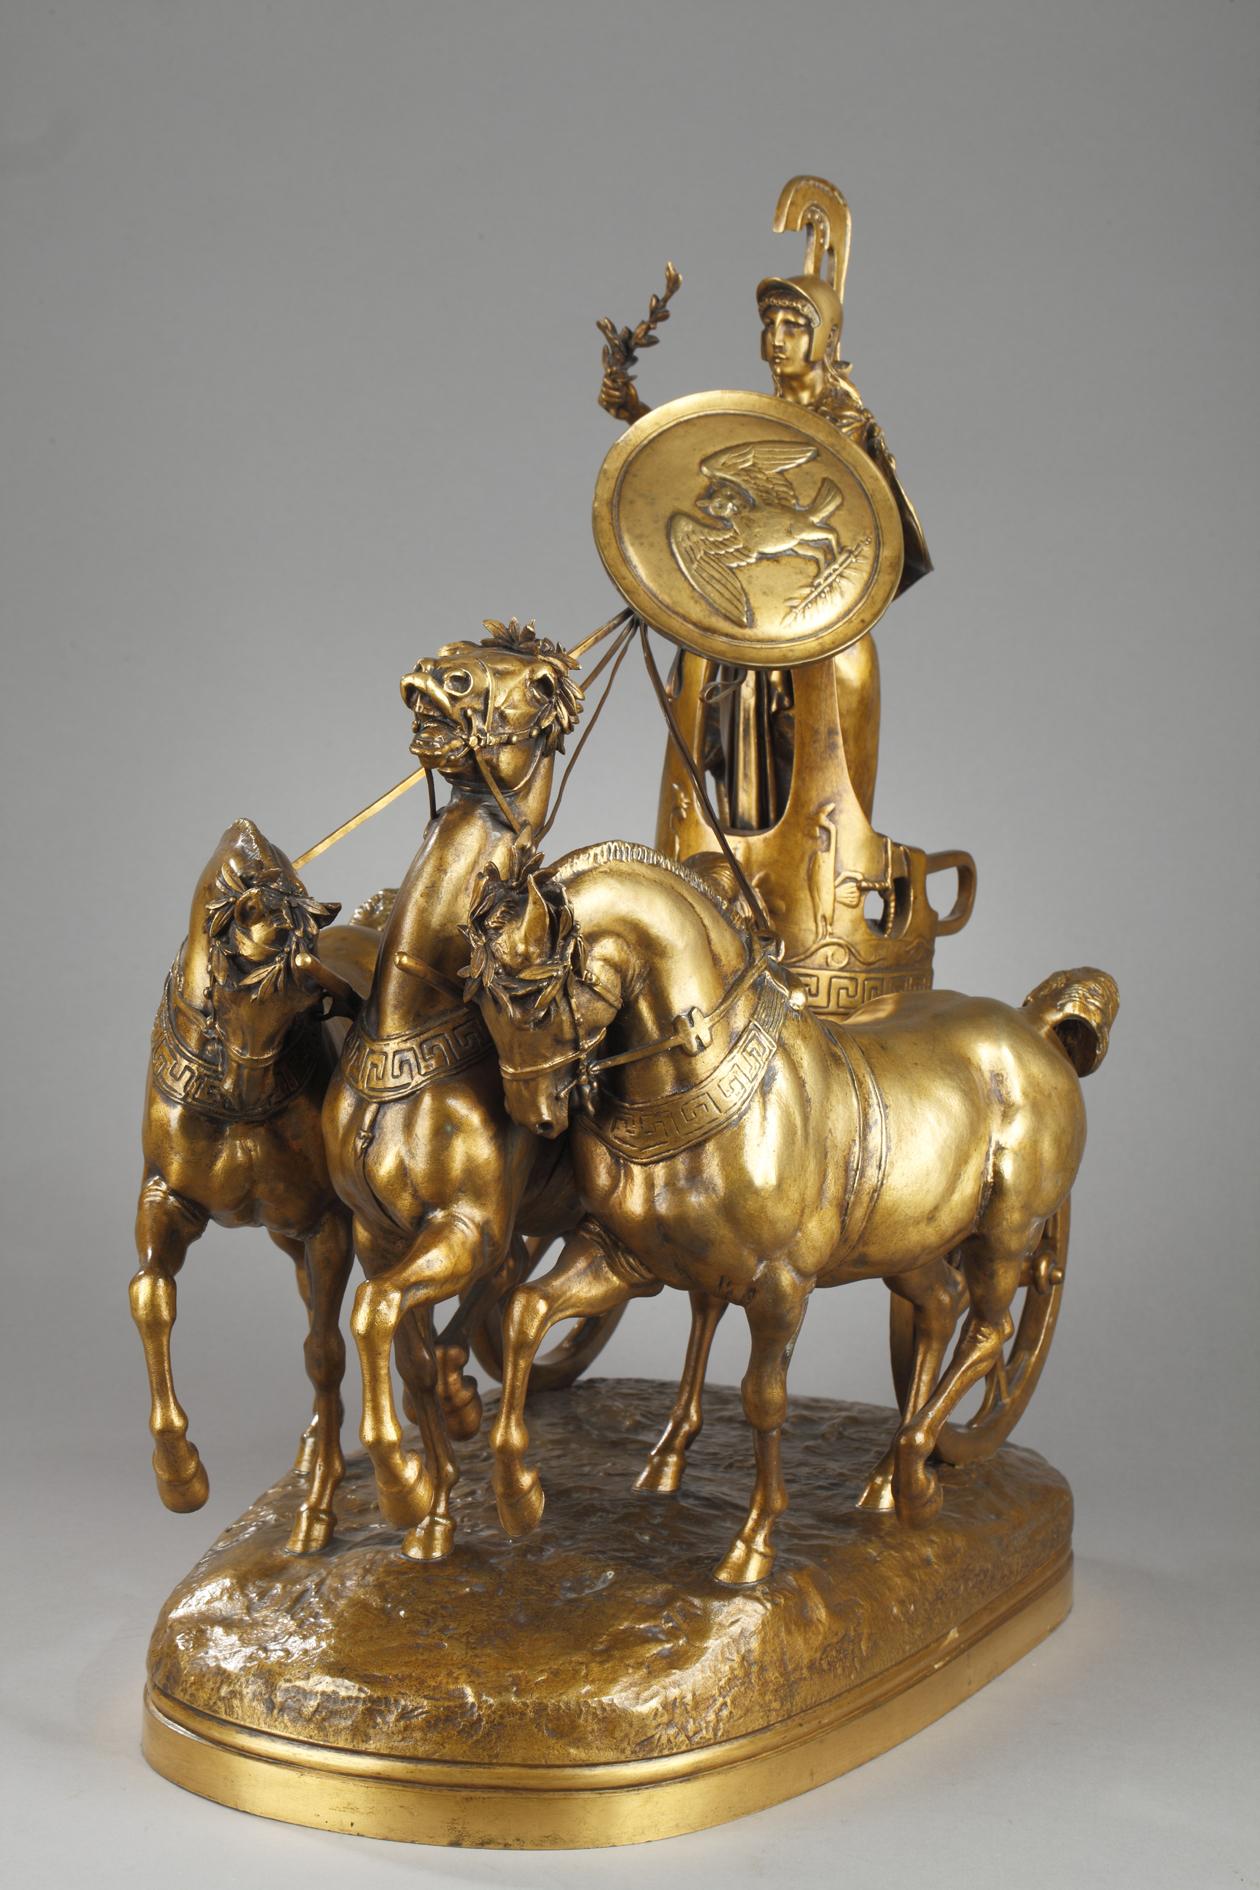 Minerva driving her chariot - Gold Figurative Sculpture by Emmanuel Fremiet